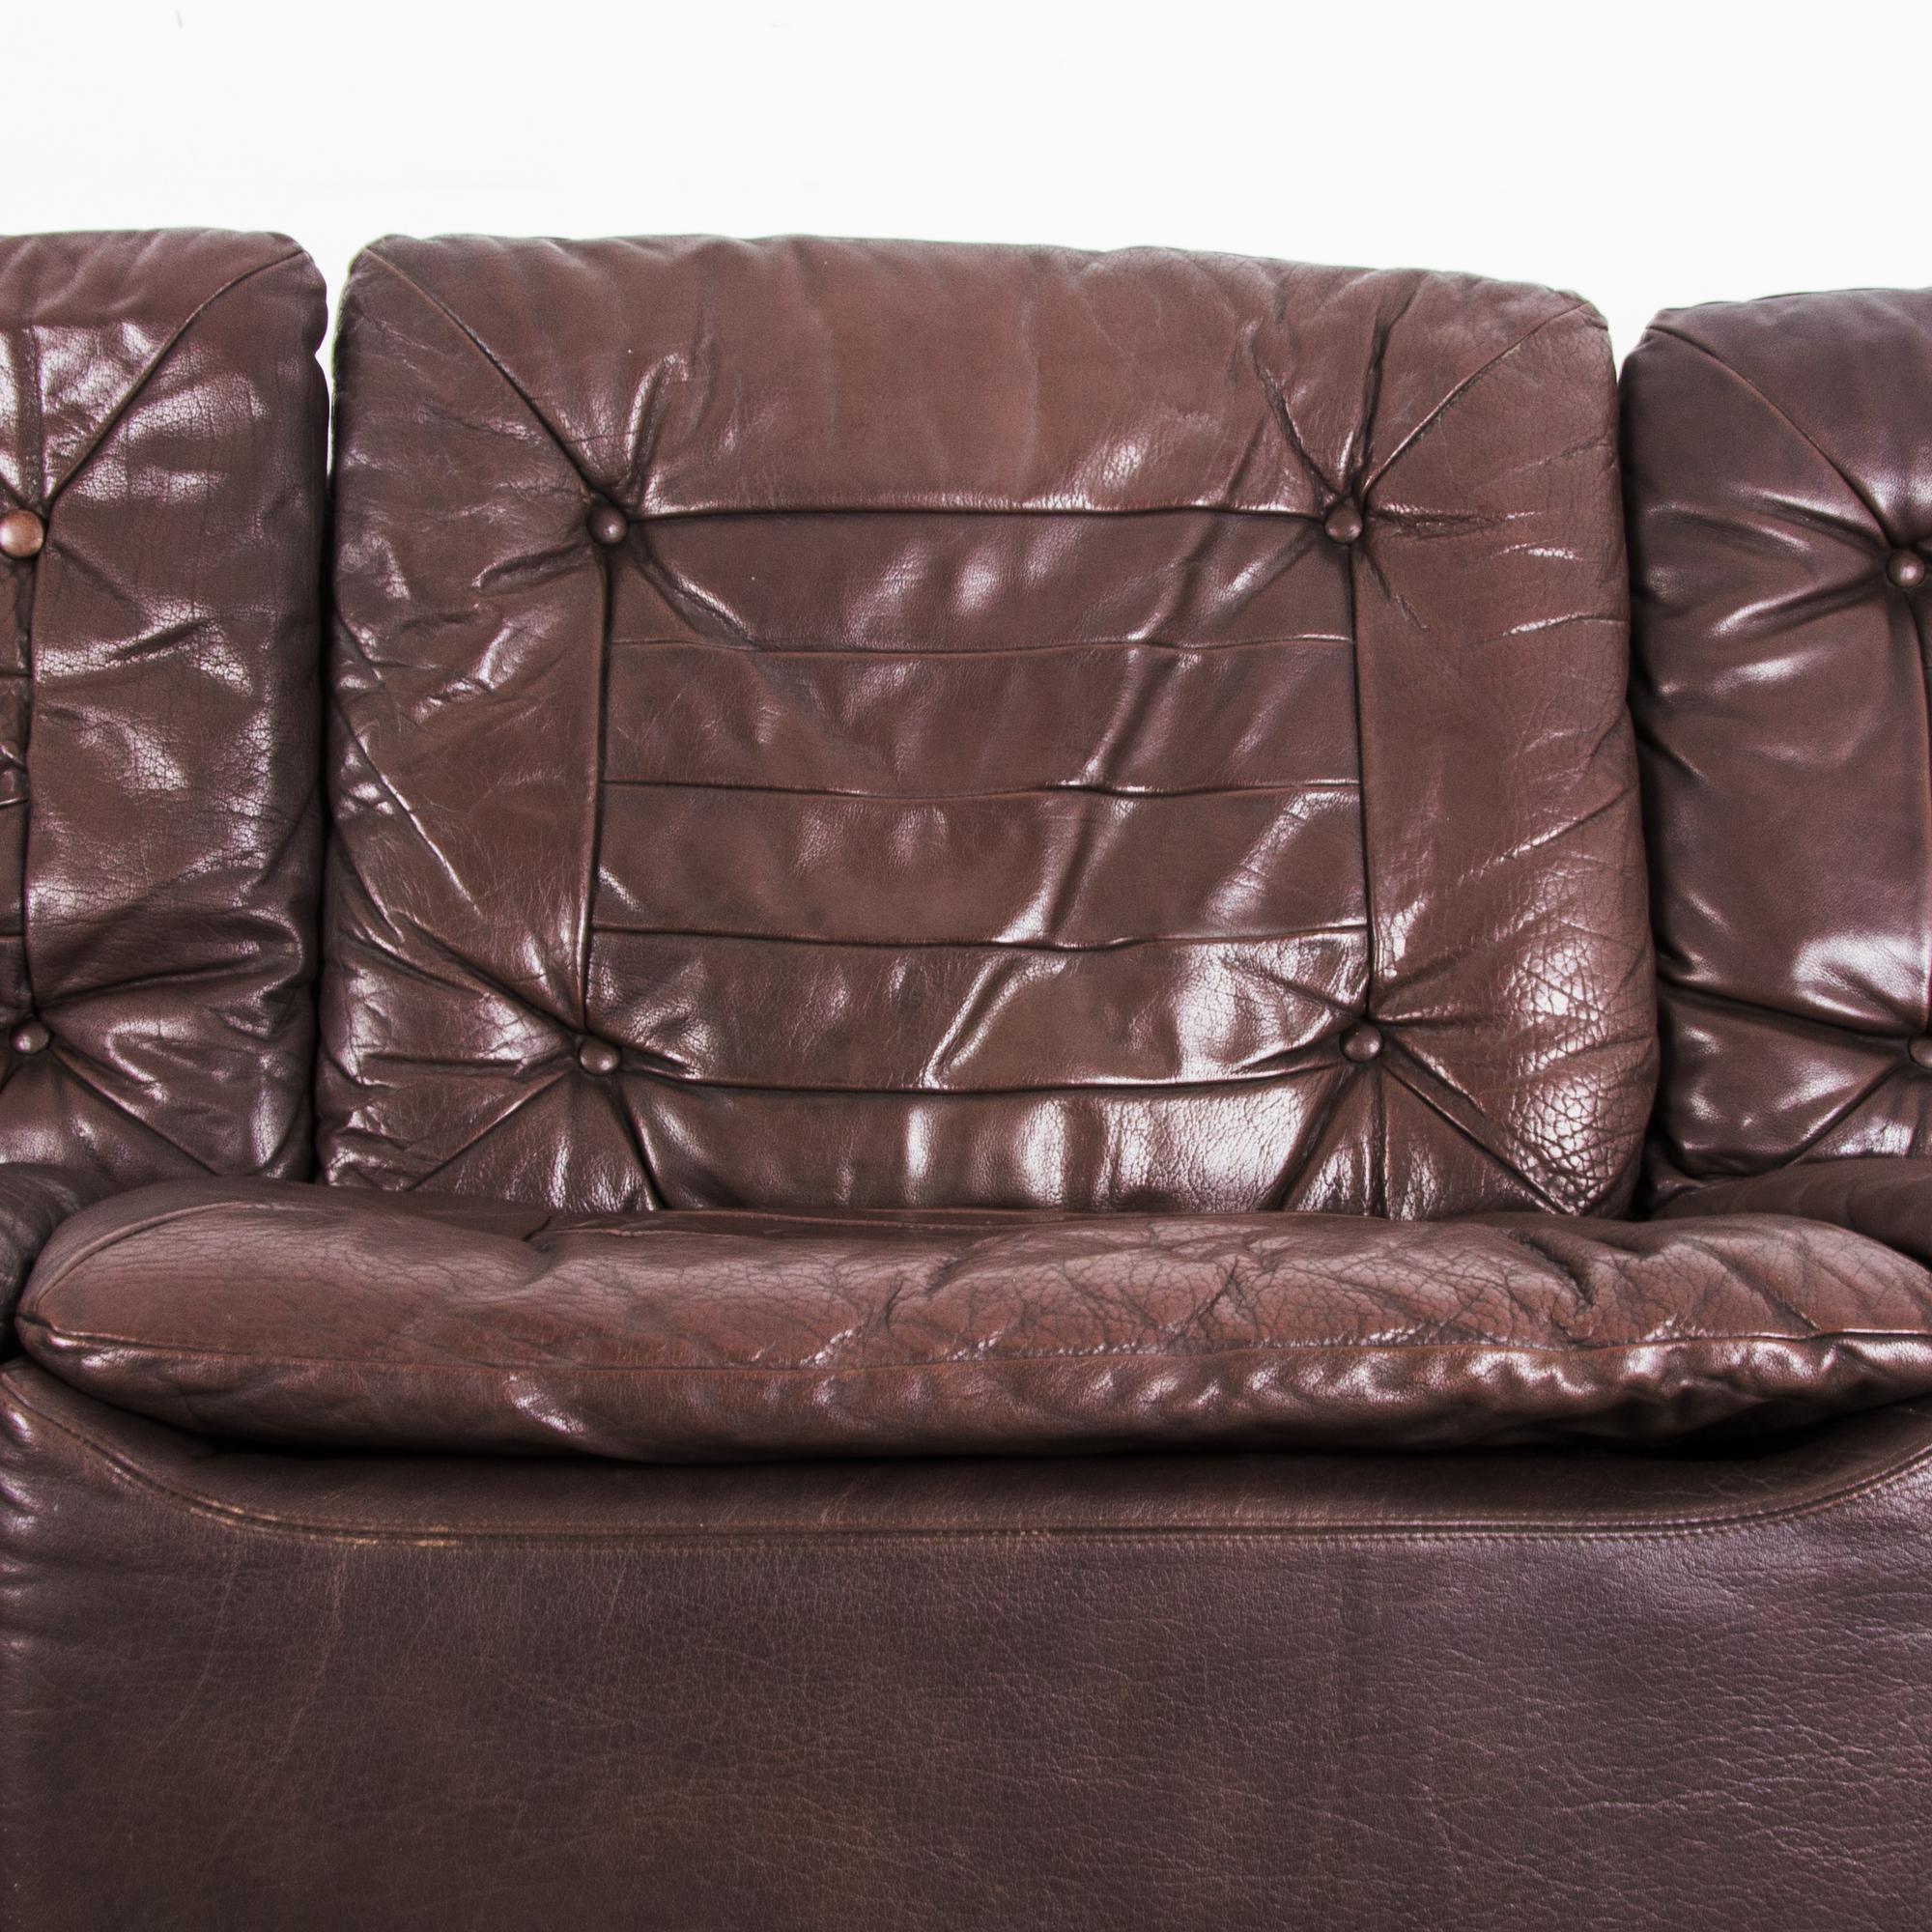 Late 20th Century 1970s Danish Modern Chocolate Brown Leather Sofa